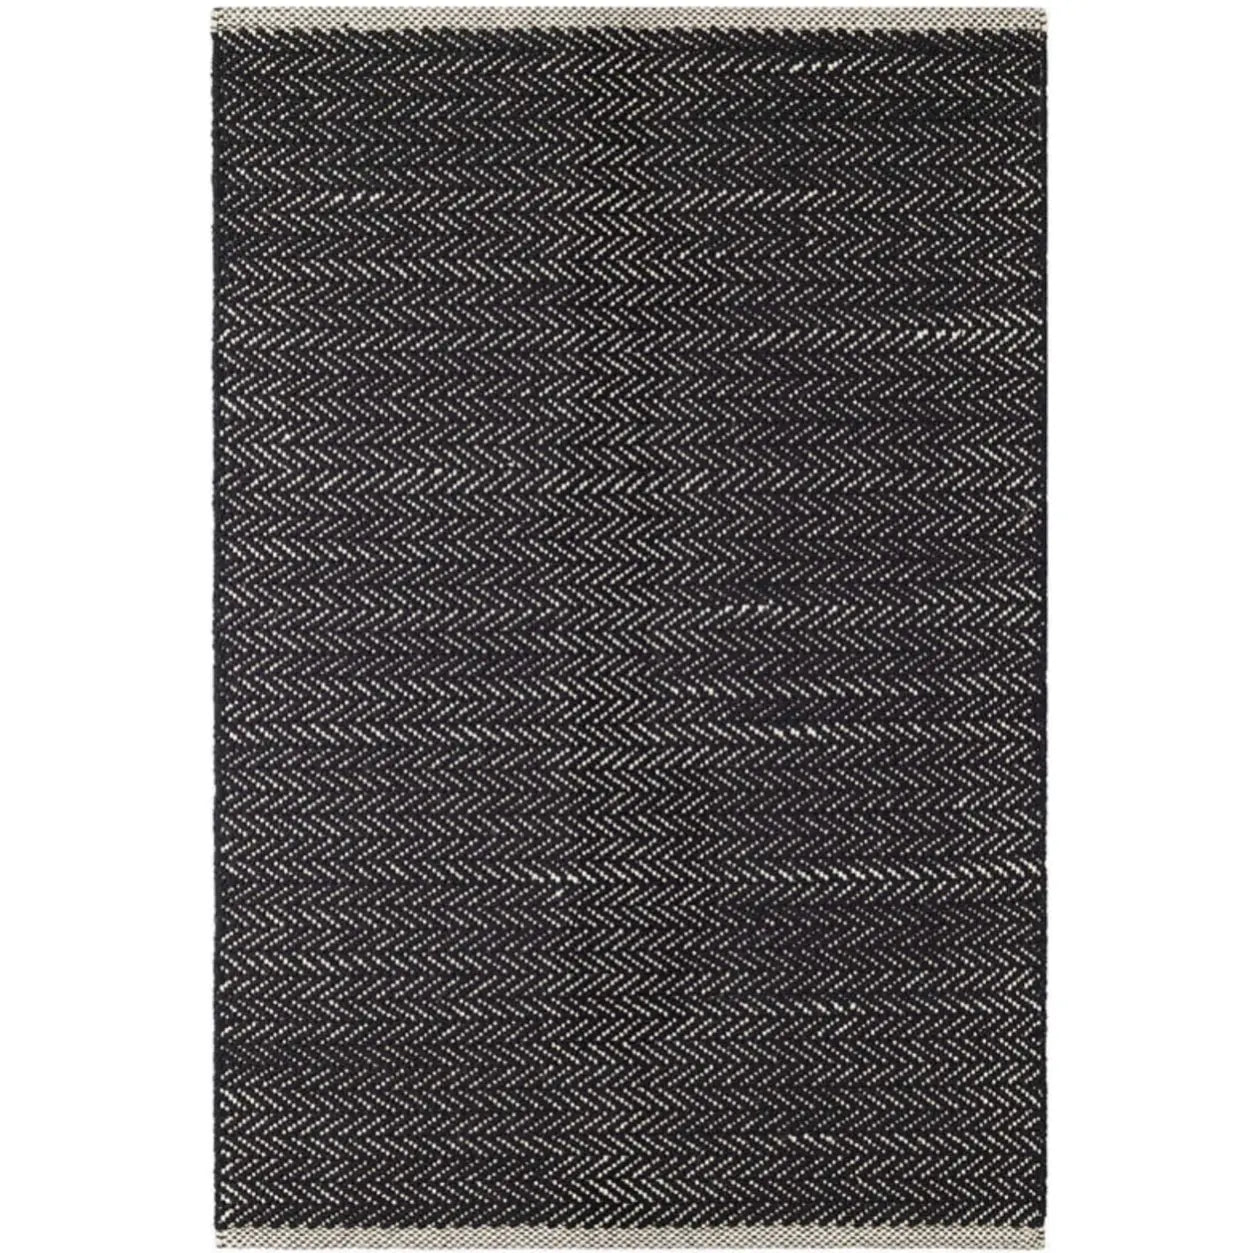 Herringbone Woven Cotton Rug in Black - Home Smith